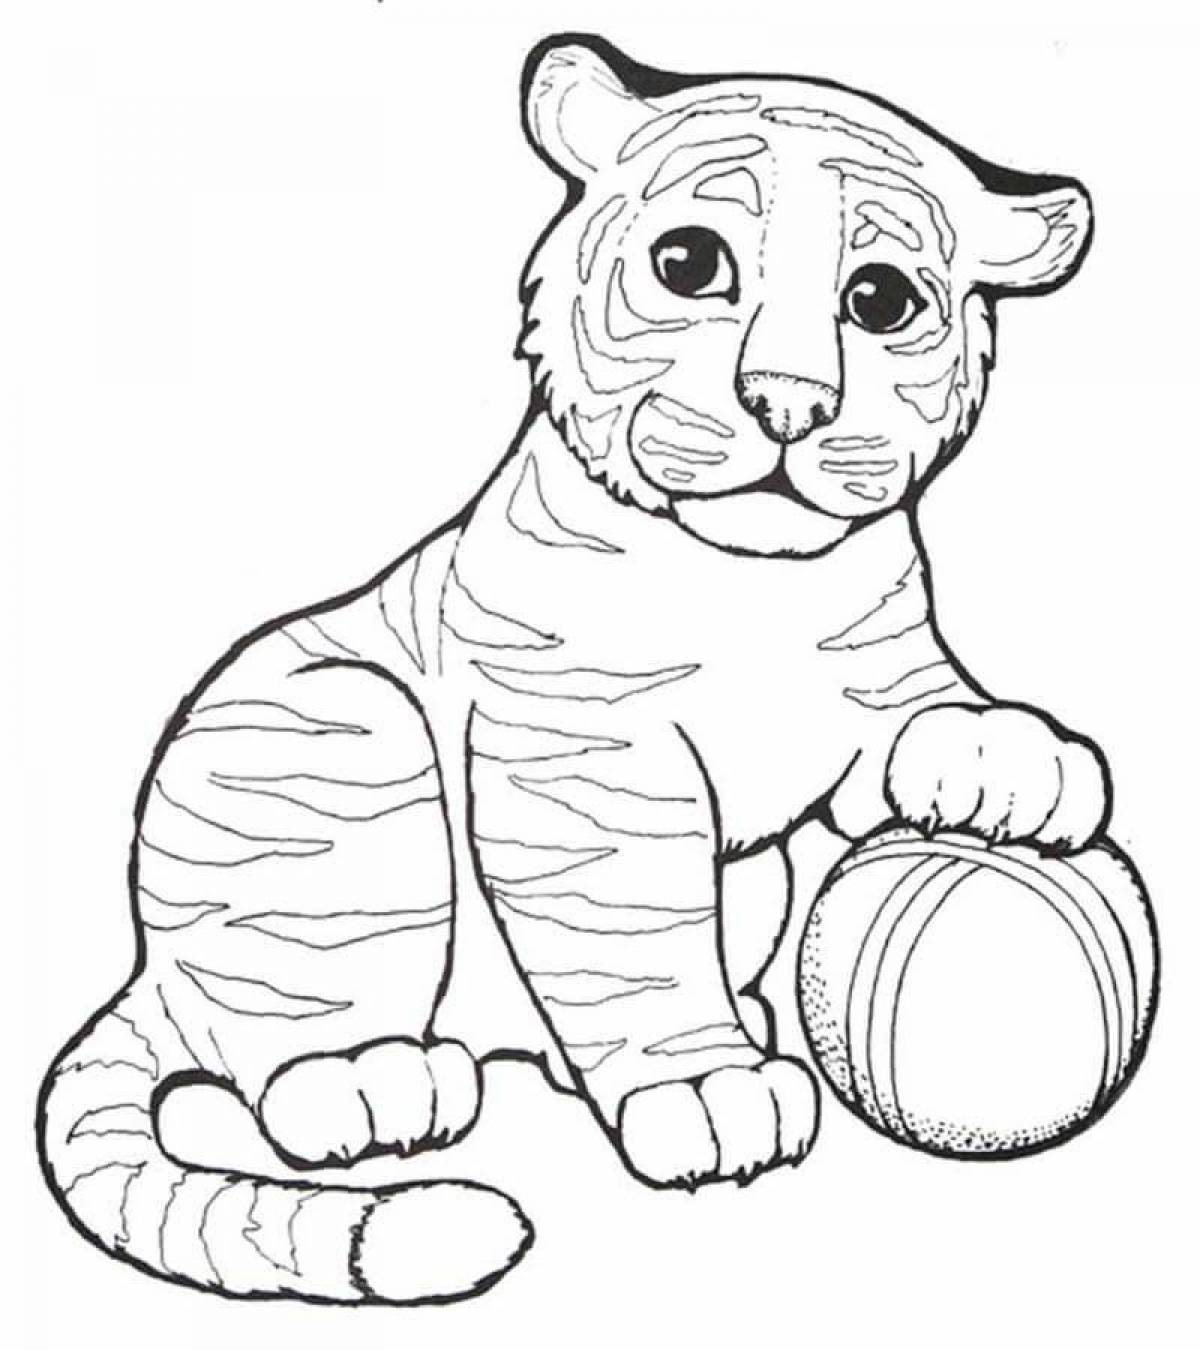 Cute tiger cub coloring page